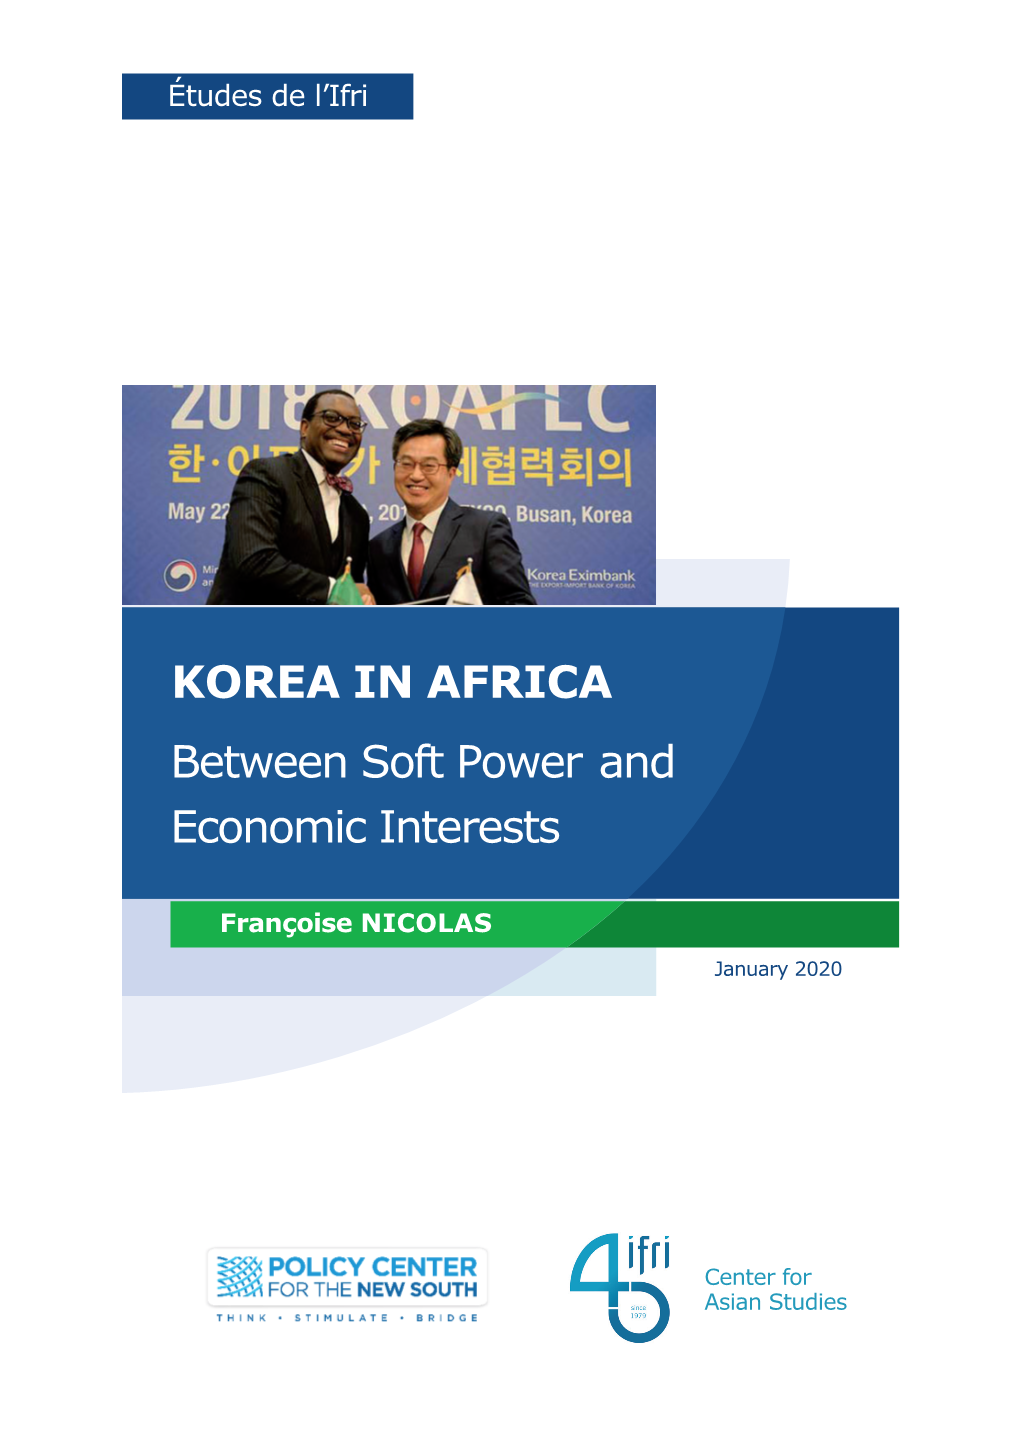 Korea in Africa: Between Soft Power and Economic Interests”, Études De L'ifri, Ifri, January 2020